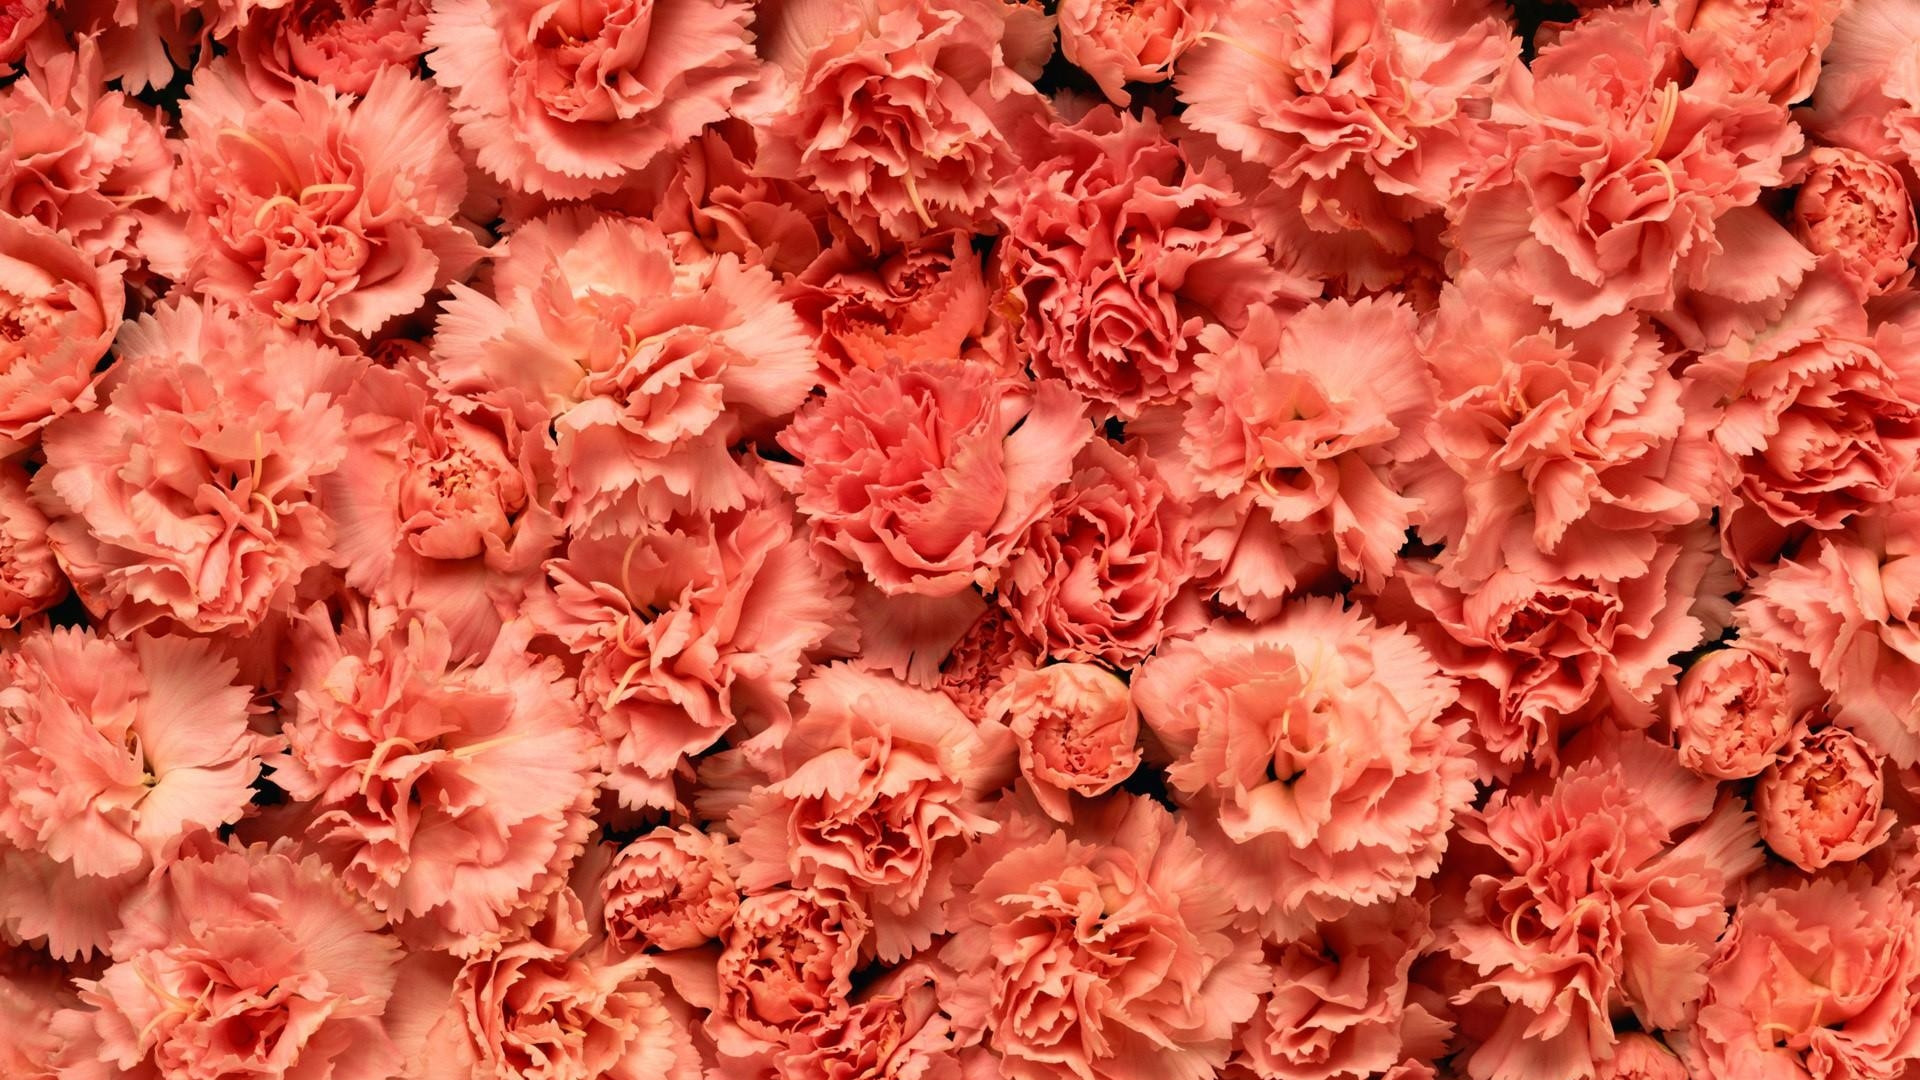 750 Carnation Pictures  Download Free Images on Unsplash